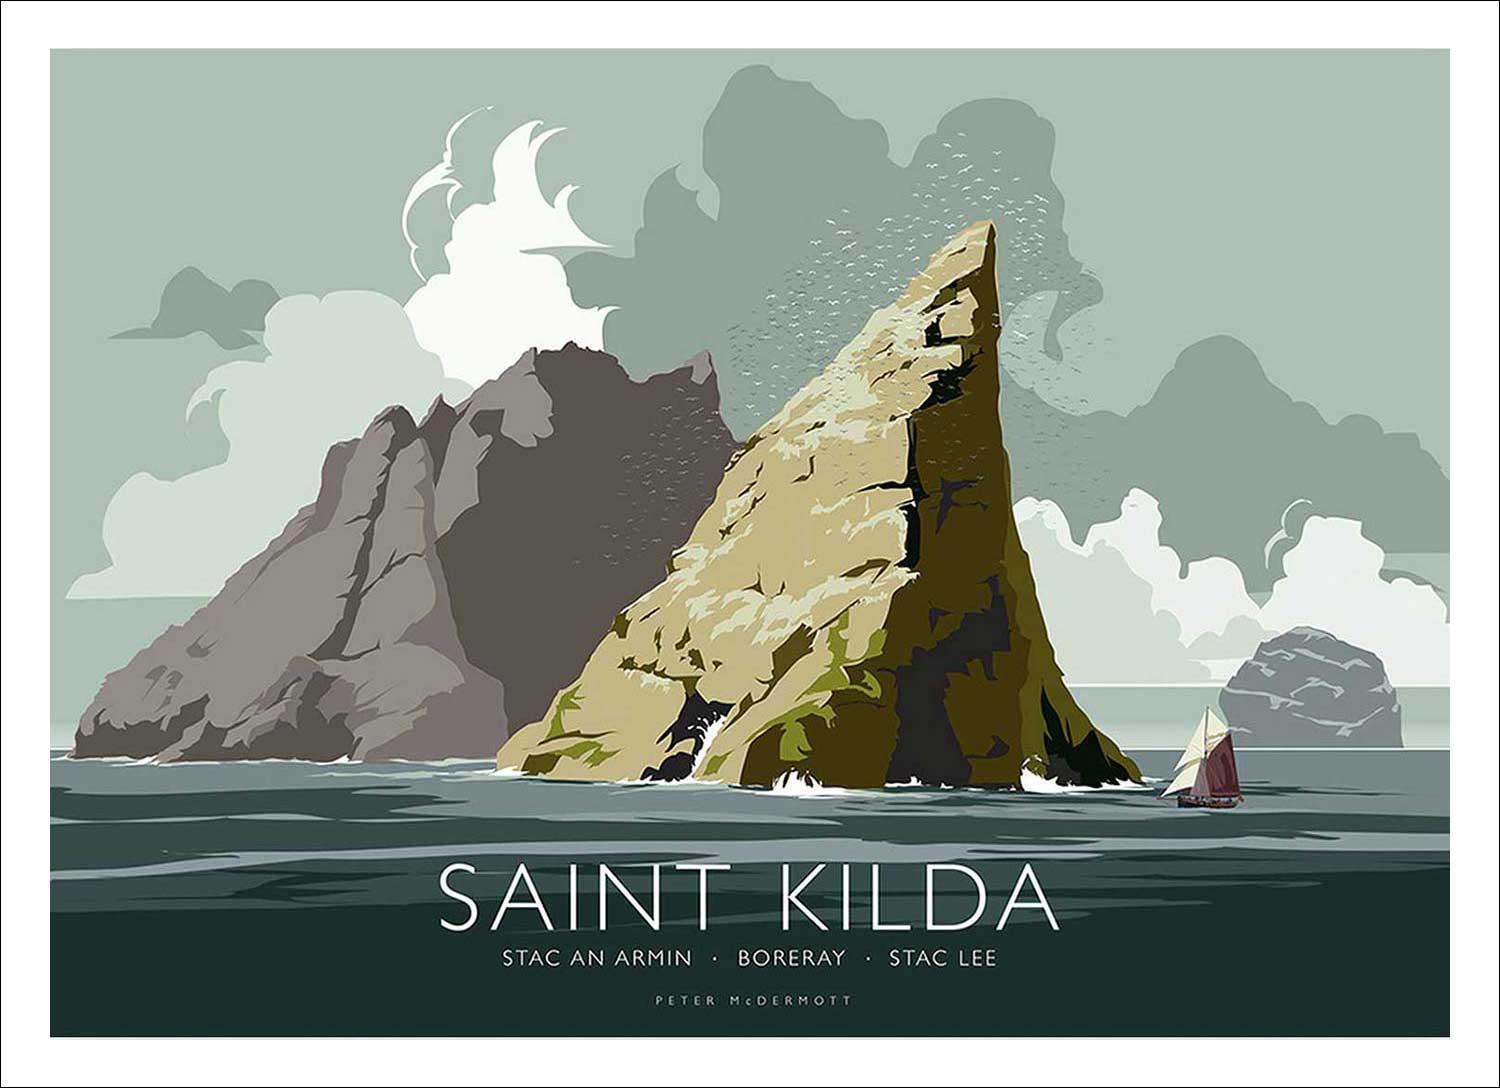 St Kilda Art Print from an original illustration by artist Peter McDermott